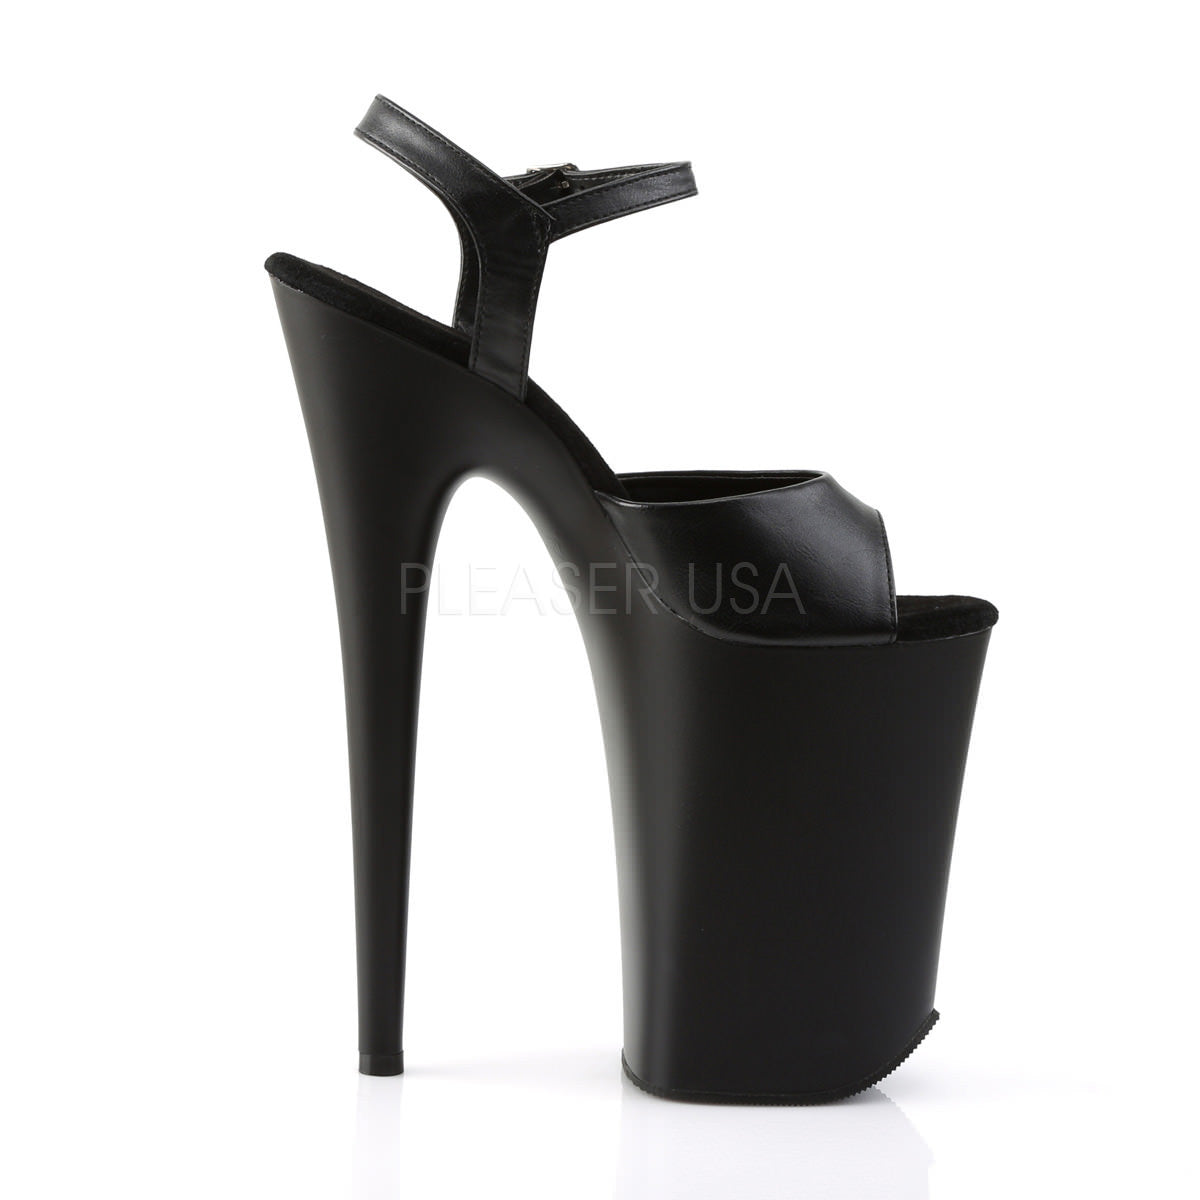 doug studebaker share 9 inch stiletto heels photos